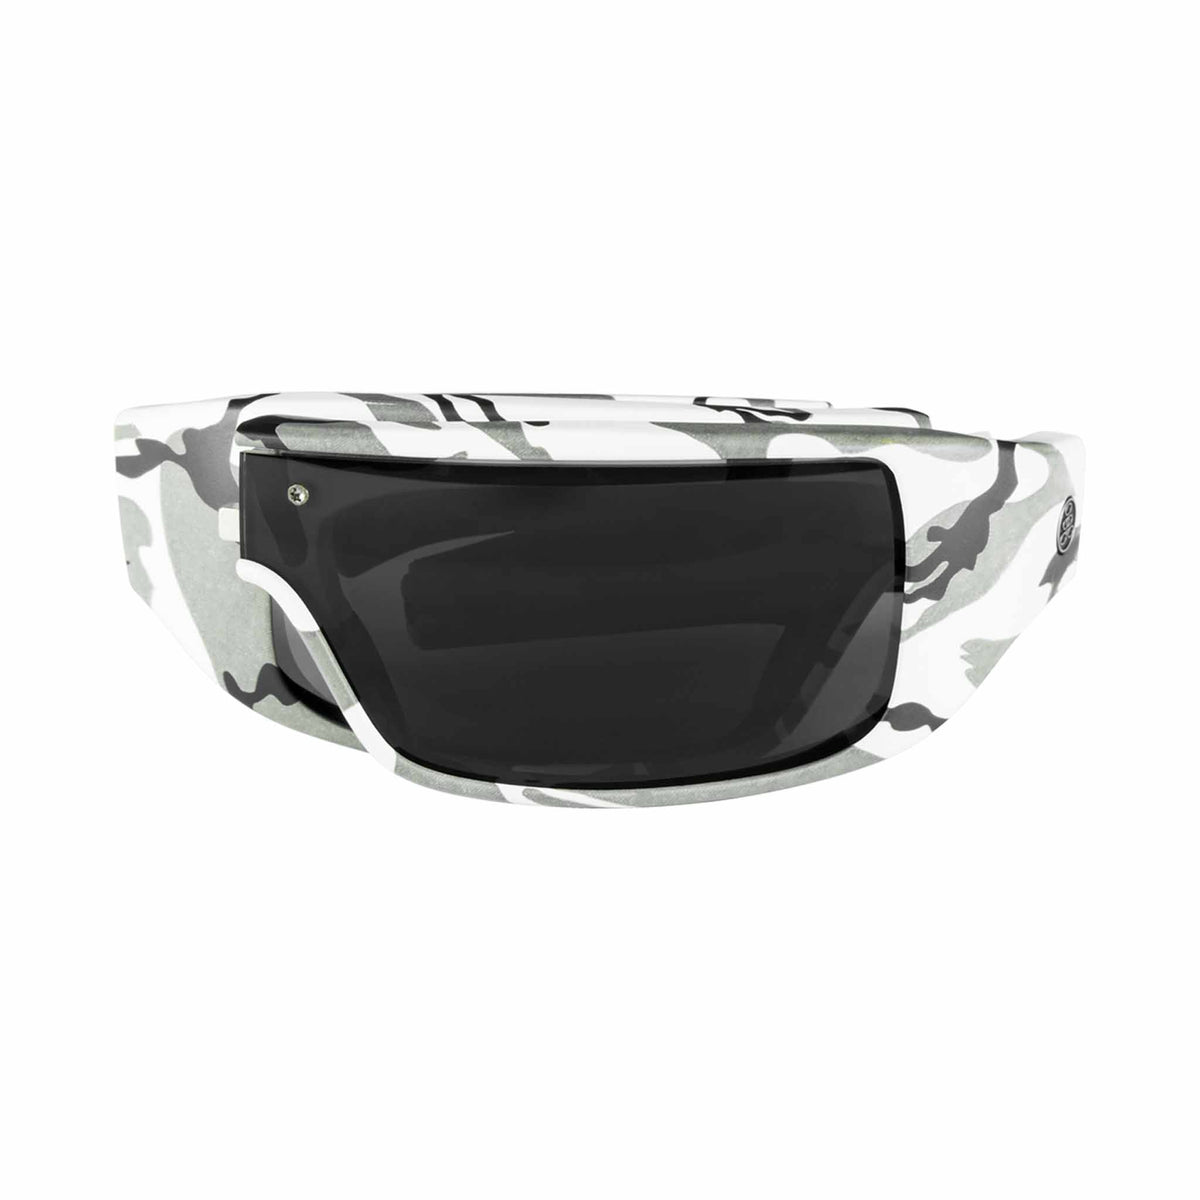 Popticals, Premium Compact Sunglasses, PopGear, 010050-CCGP, Polarized Sunglasses, Matte White Camo Frame, Gray Lenses, Compact View